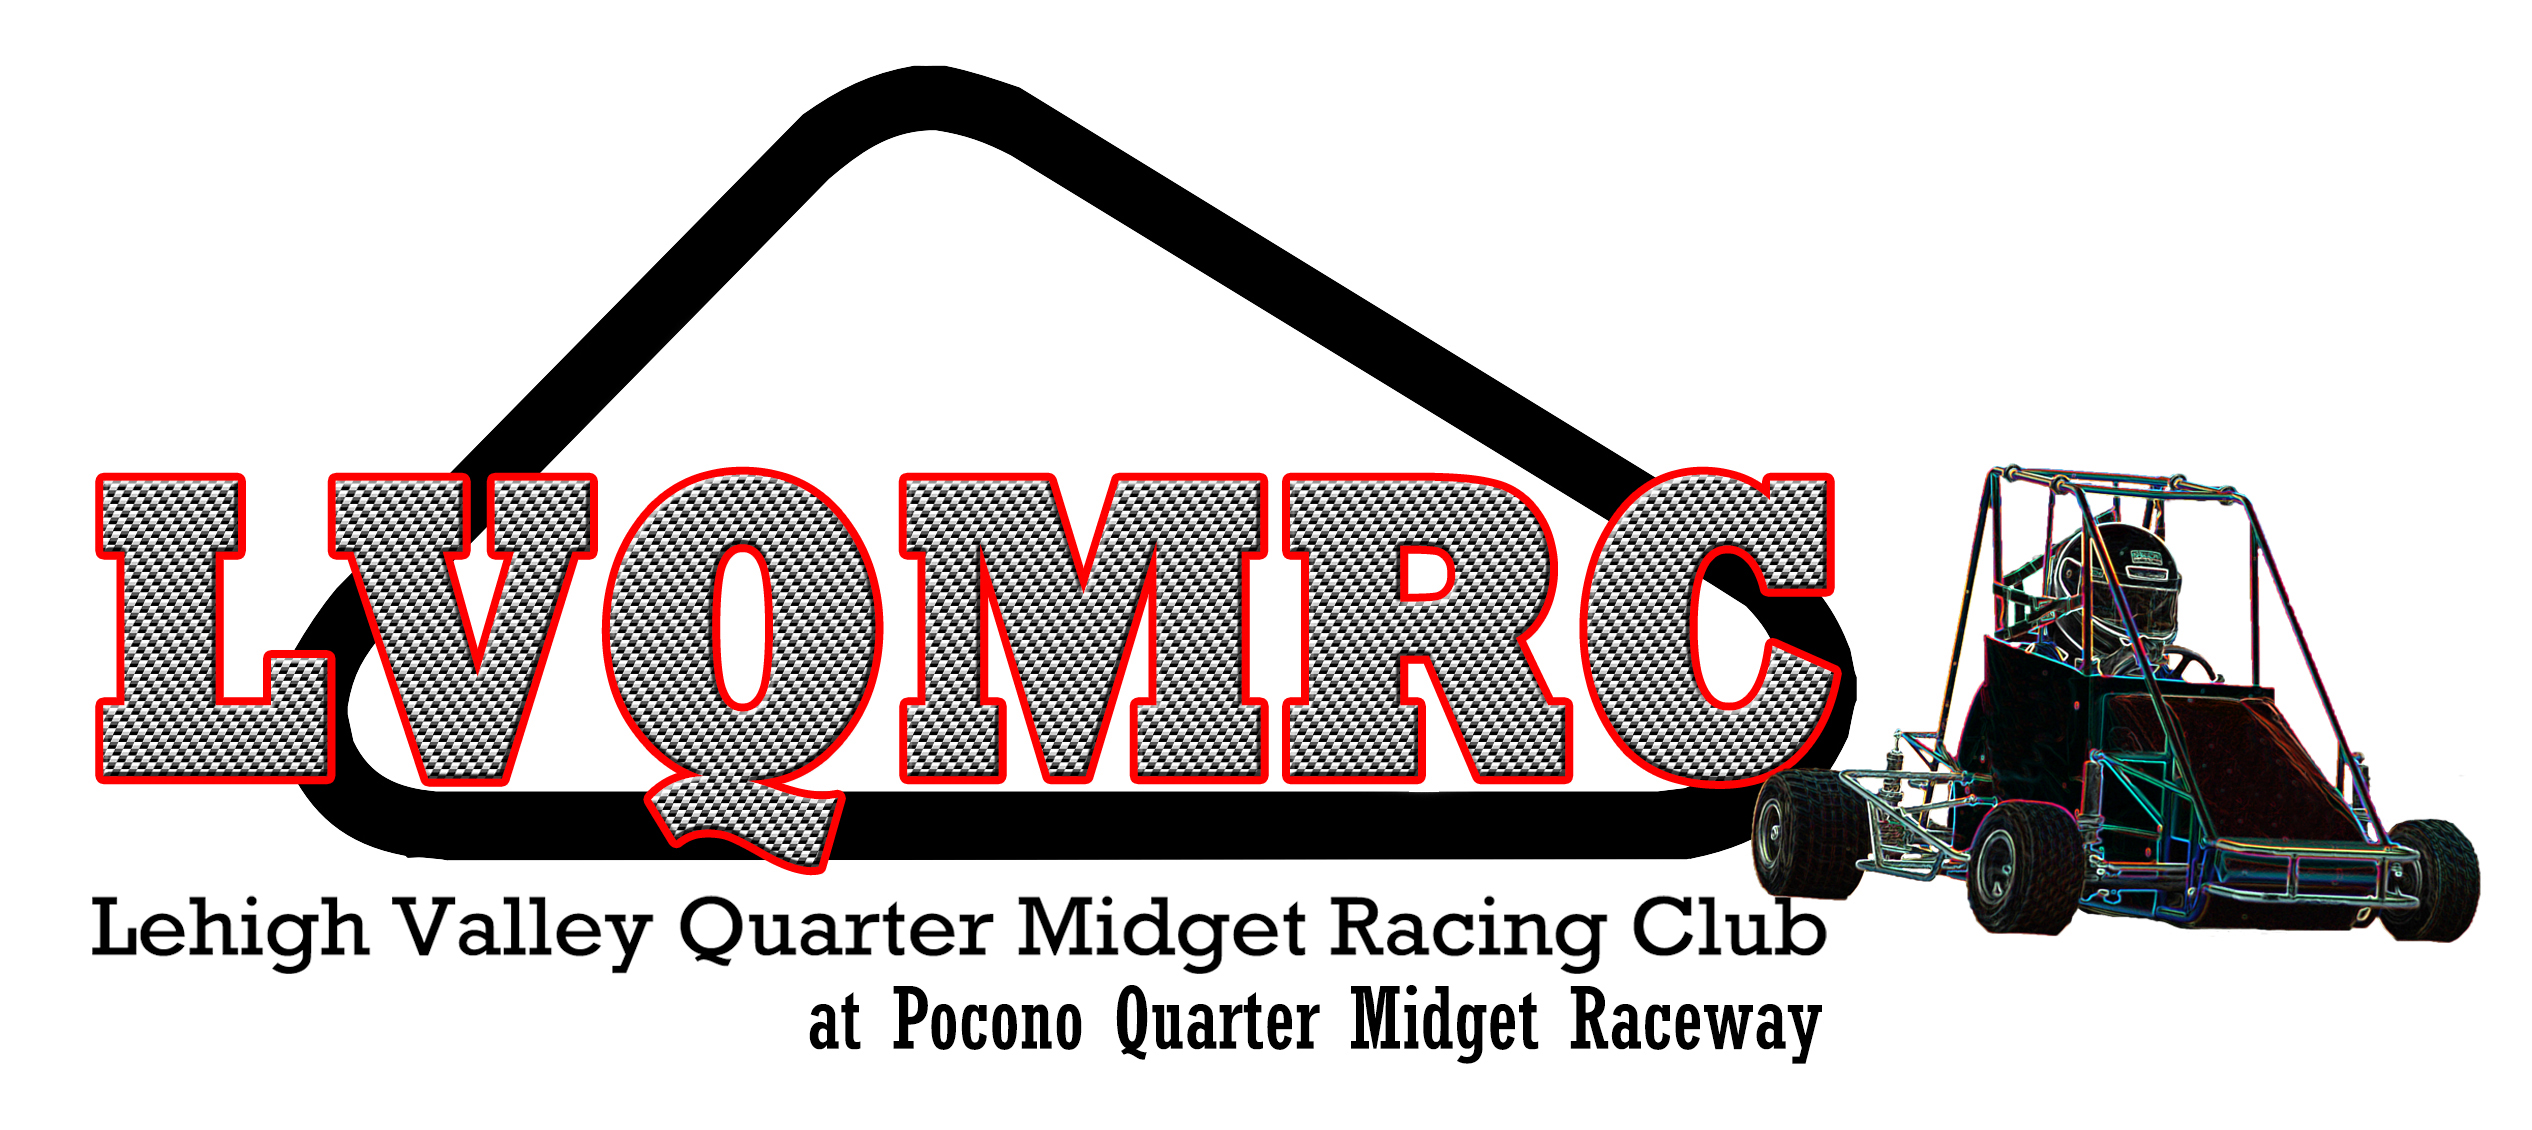 LVQMRC at Pocono Quarter Midget Raceway.